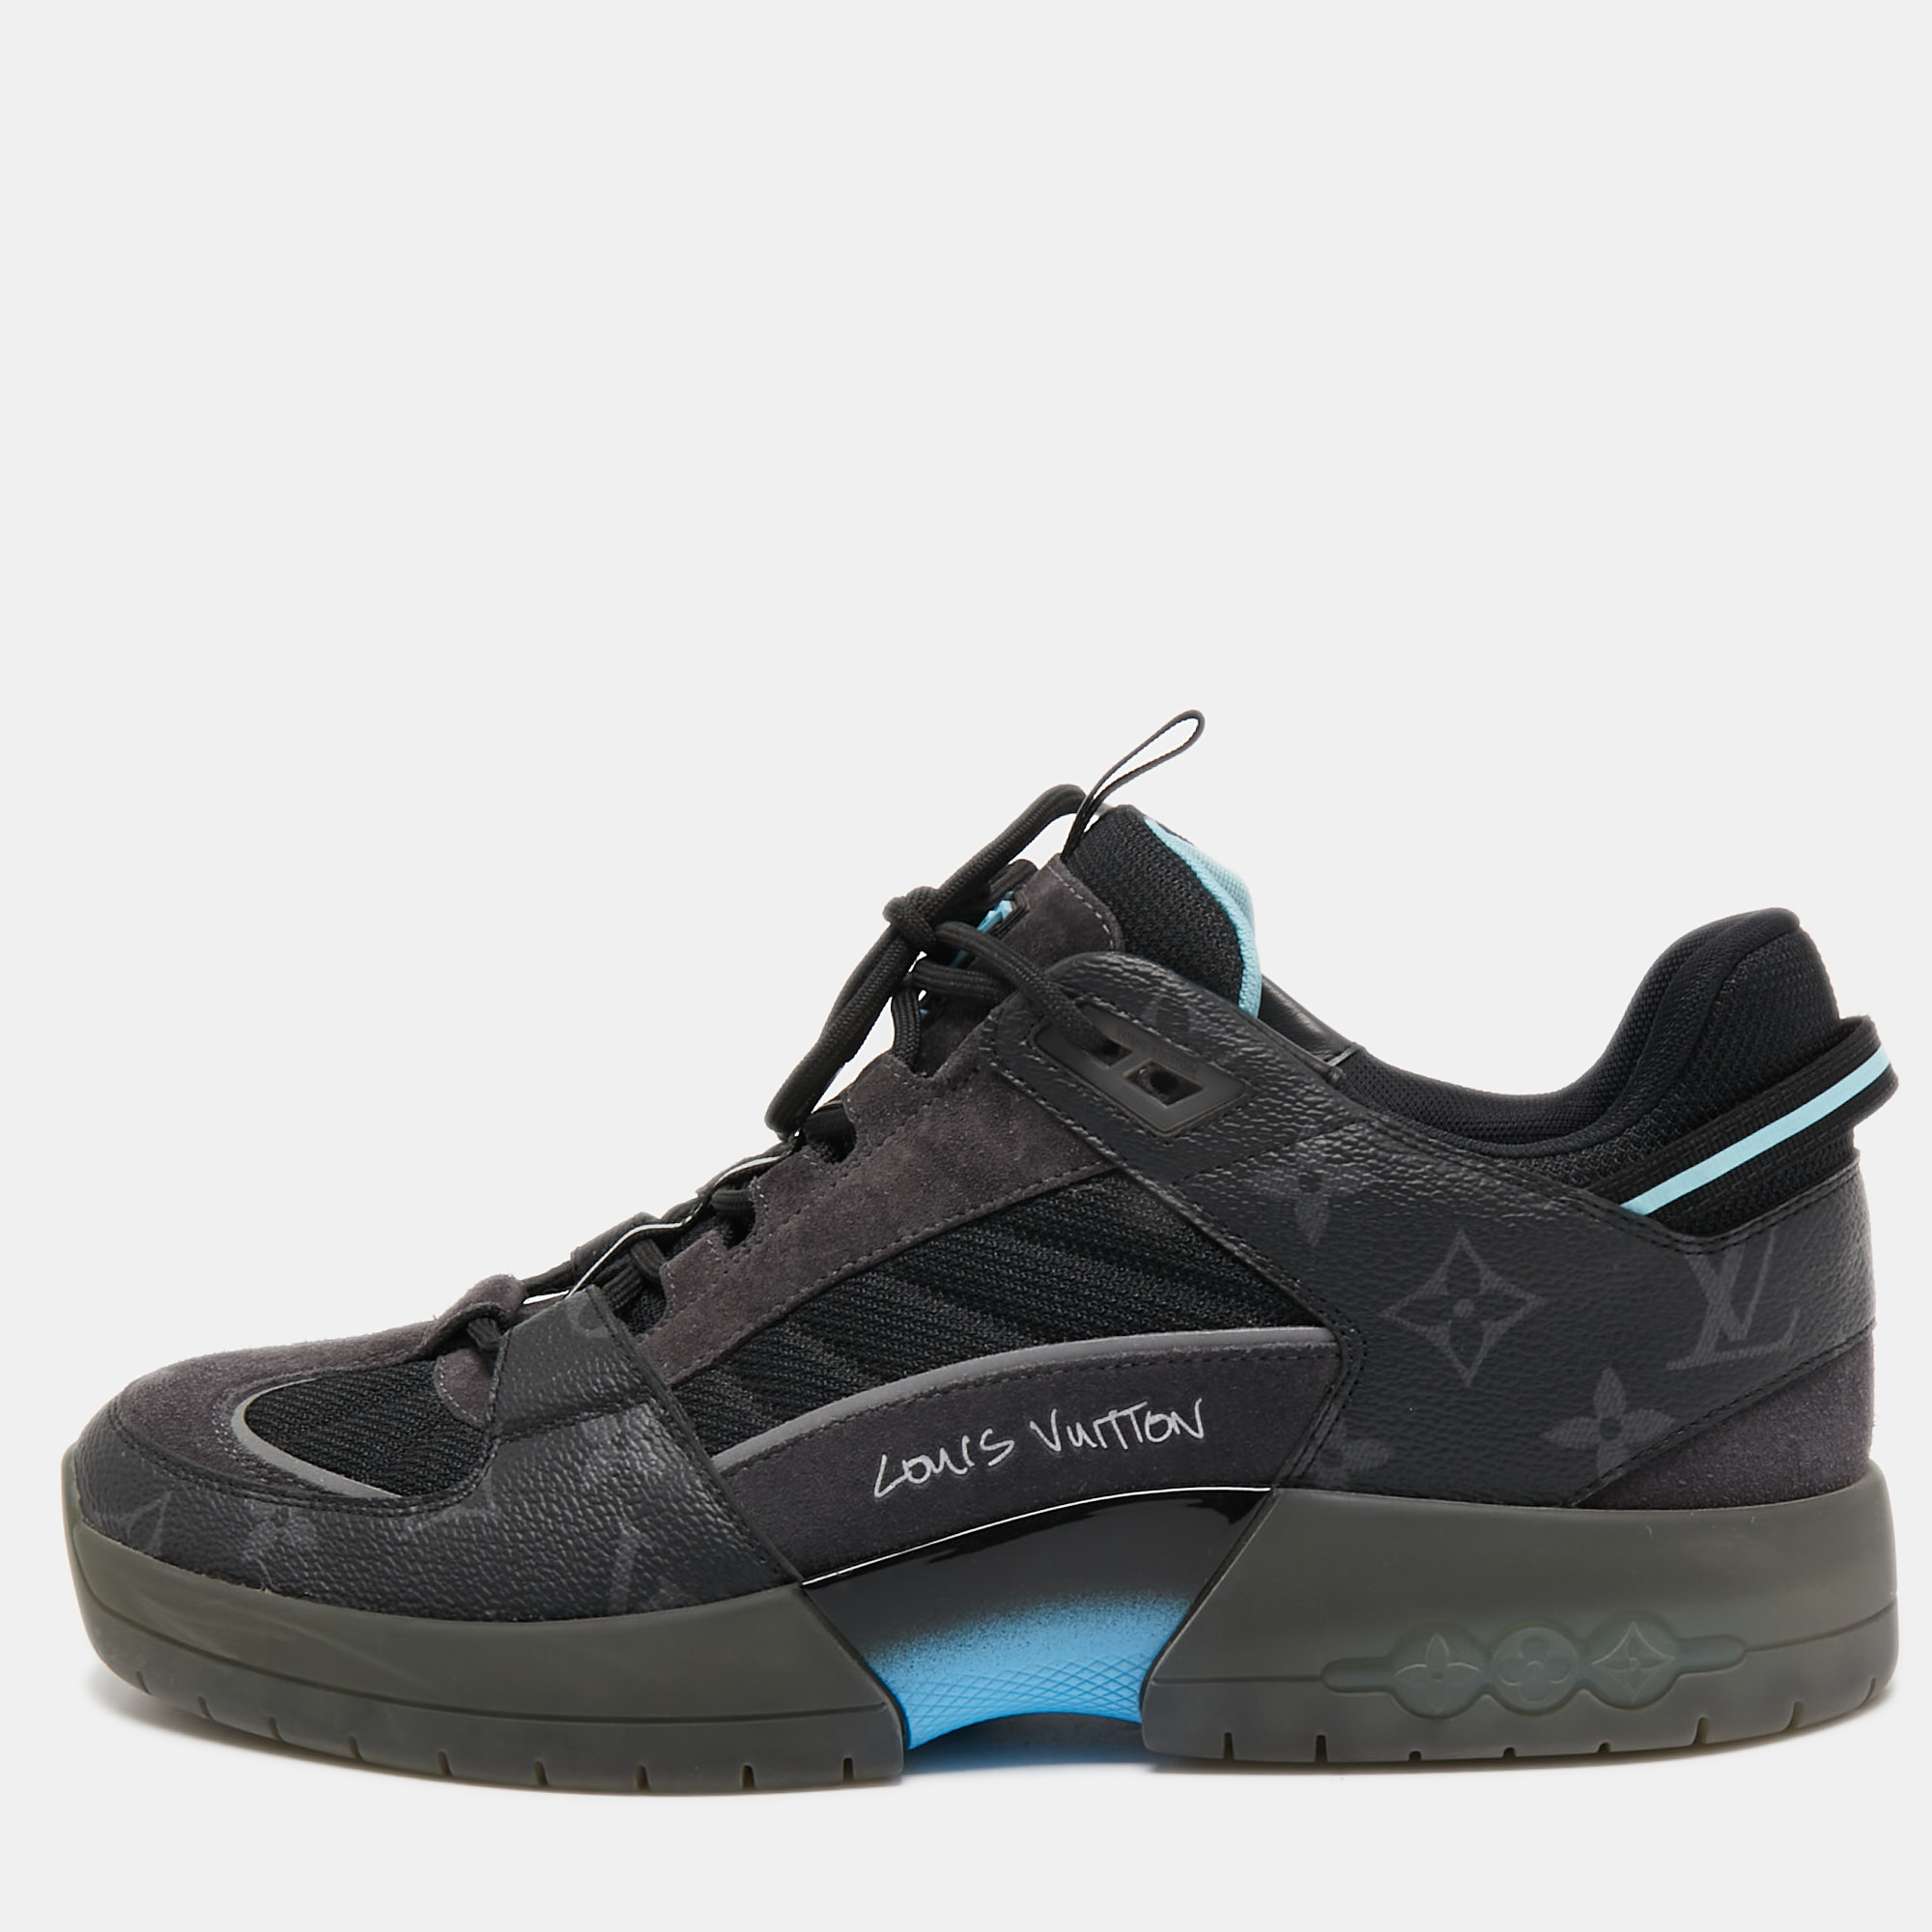 Louis Vuitton Sneakers - 2020-03-25 - 504